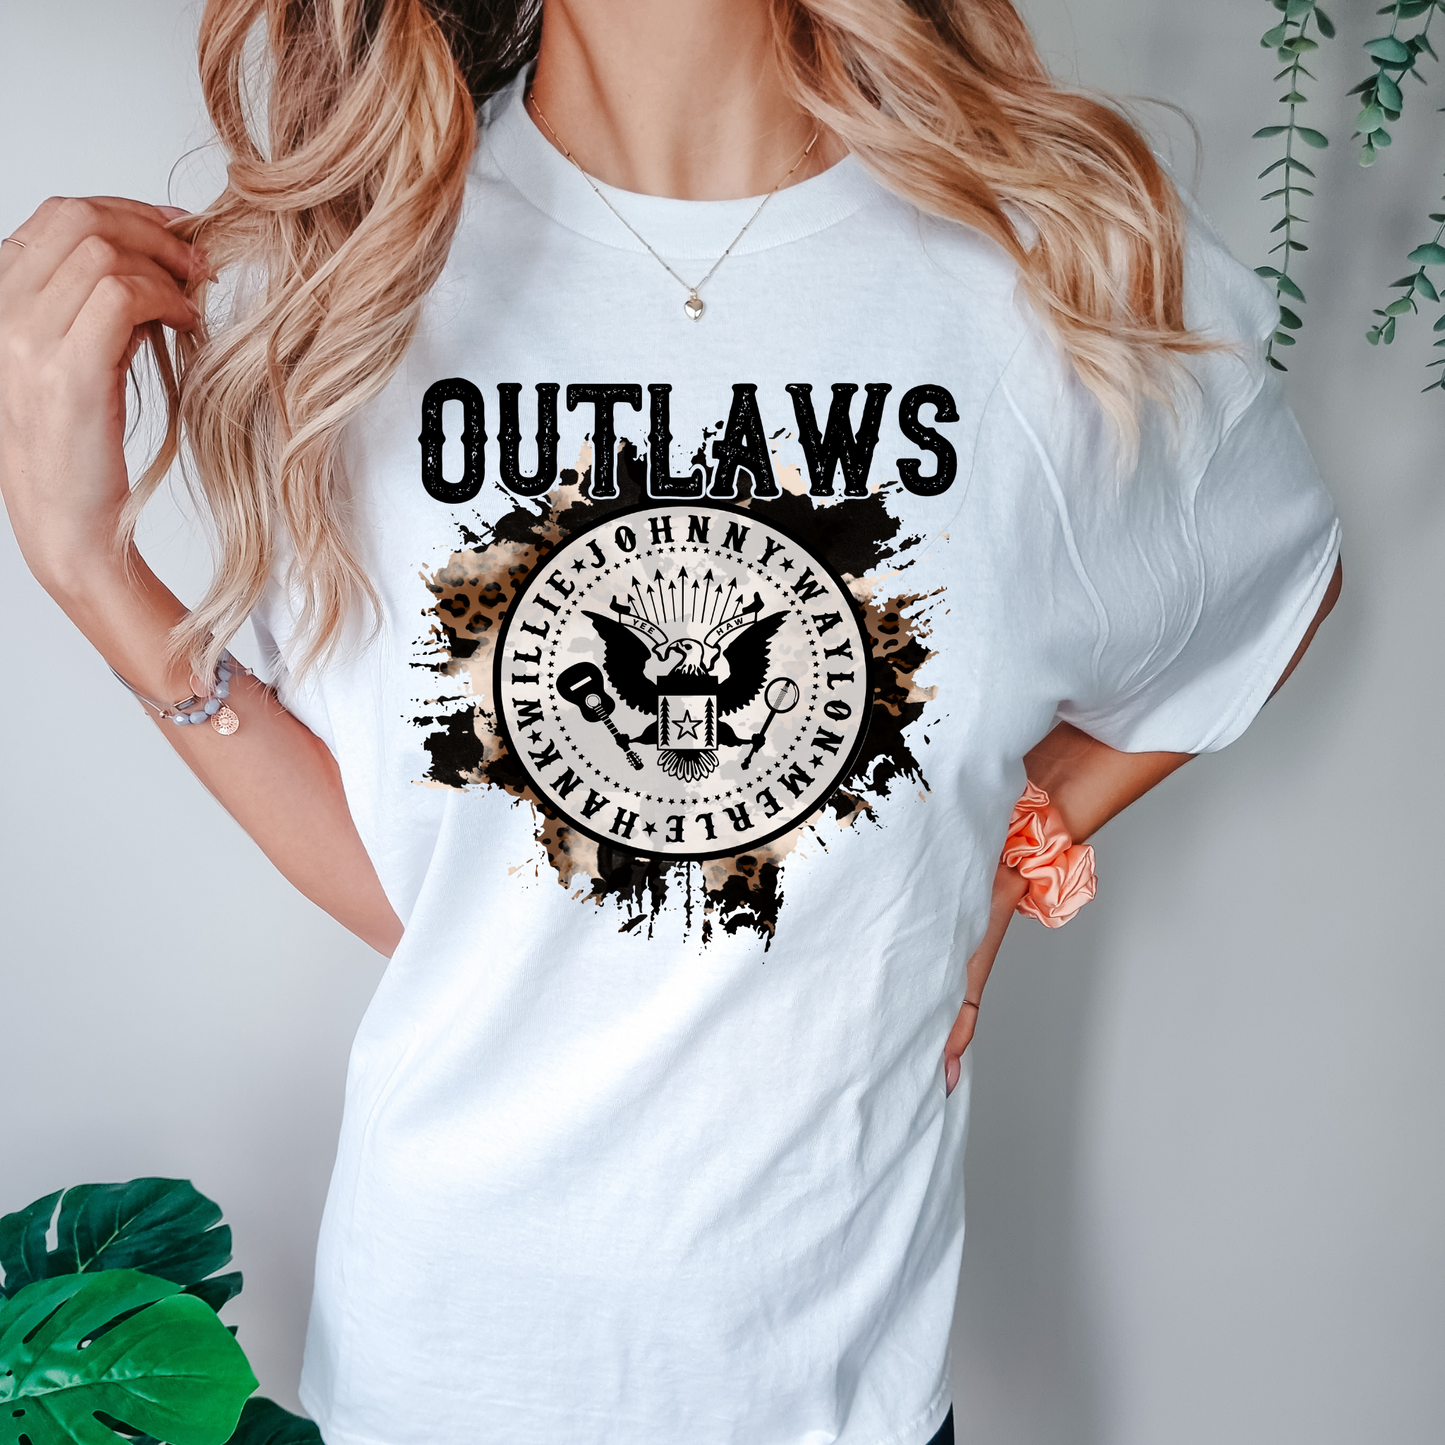 Outlaws Johnny Waylon Merle Hank Willie